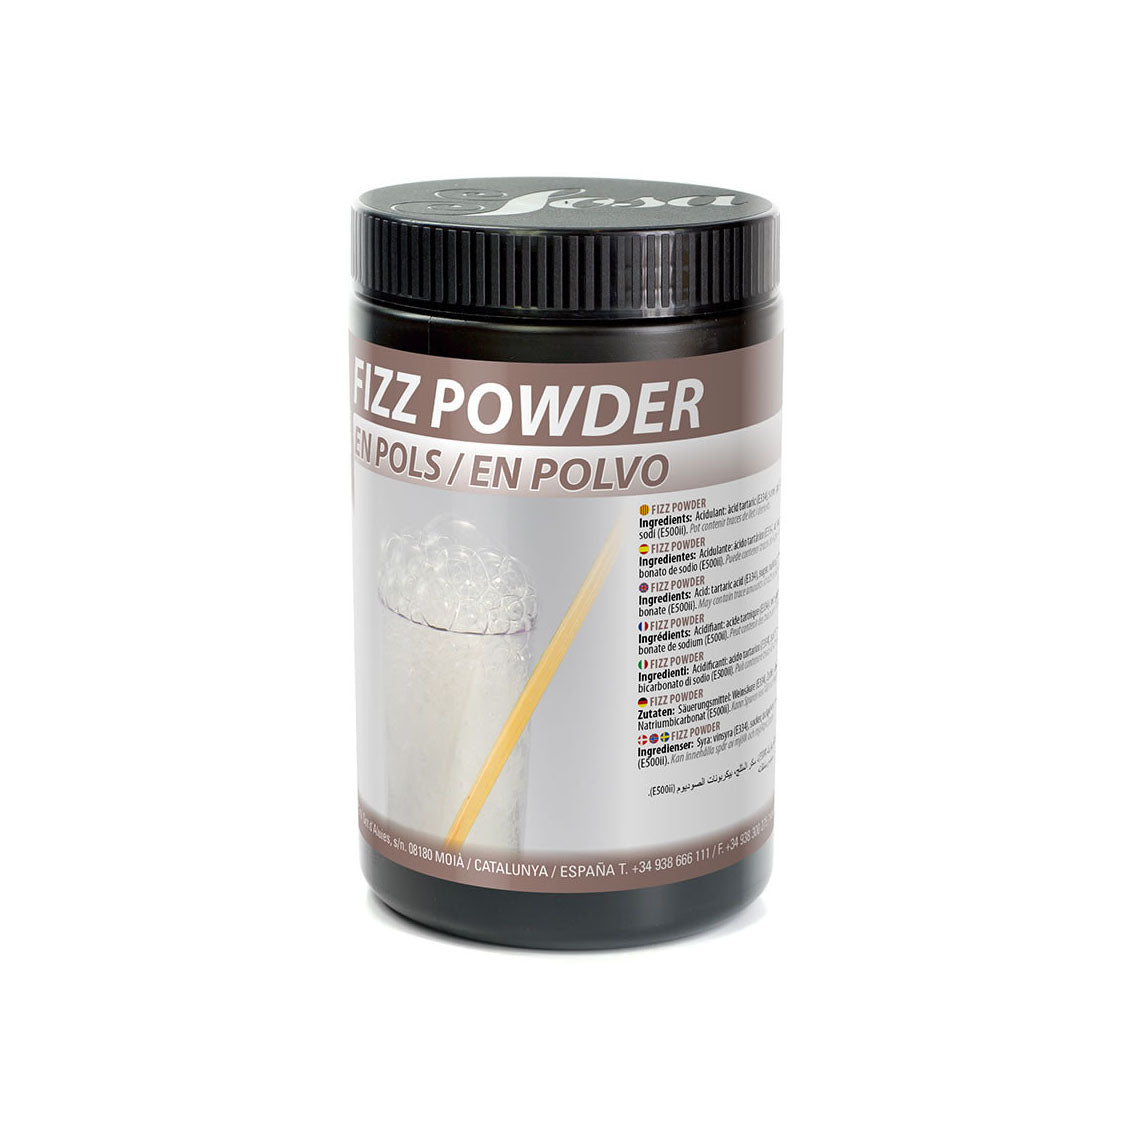 SOSA Fizz Powder, 700g